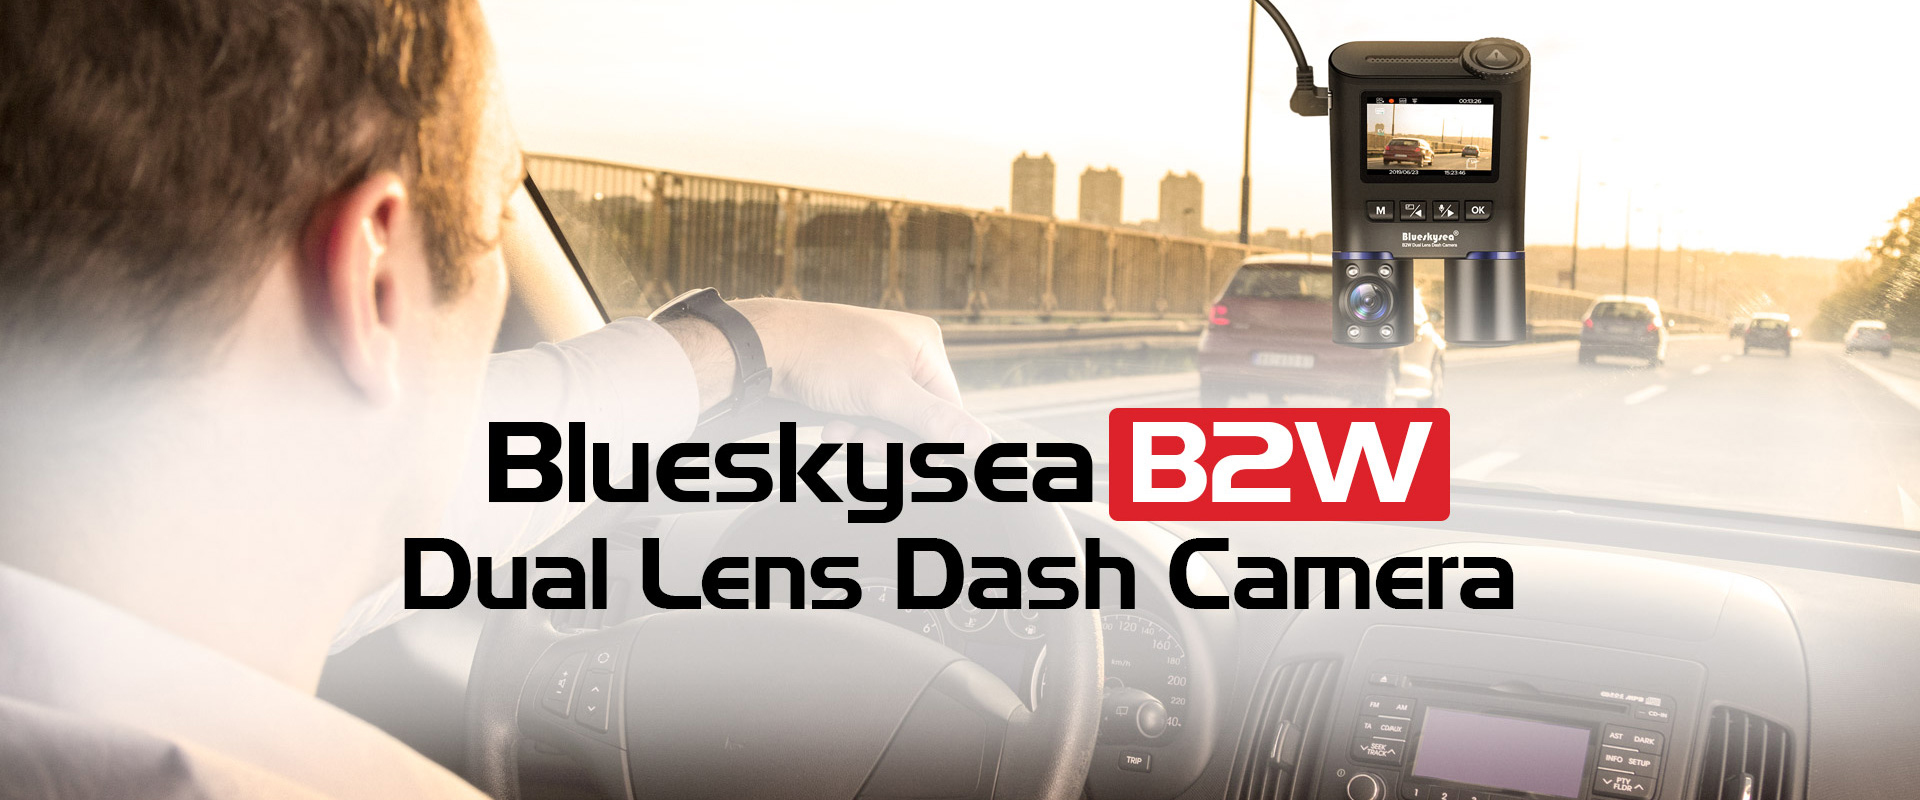 Blueskysea: The Best Value Dash Cam